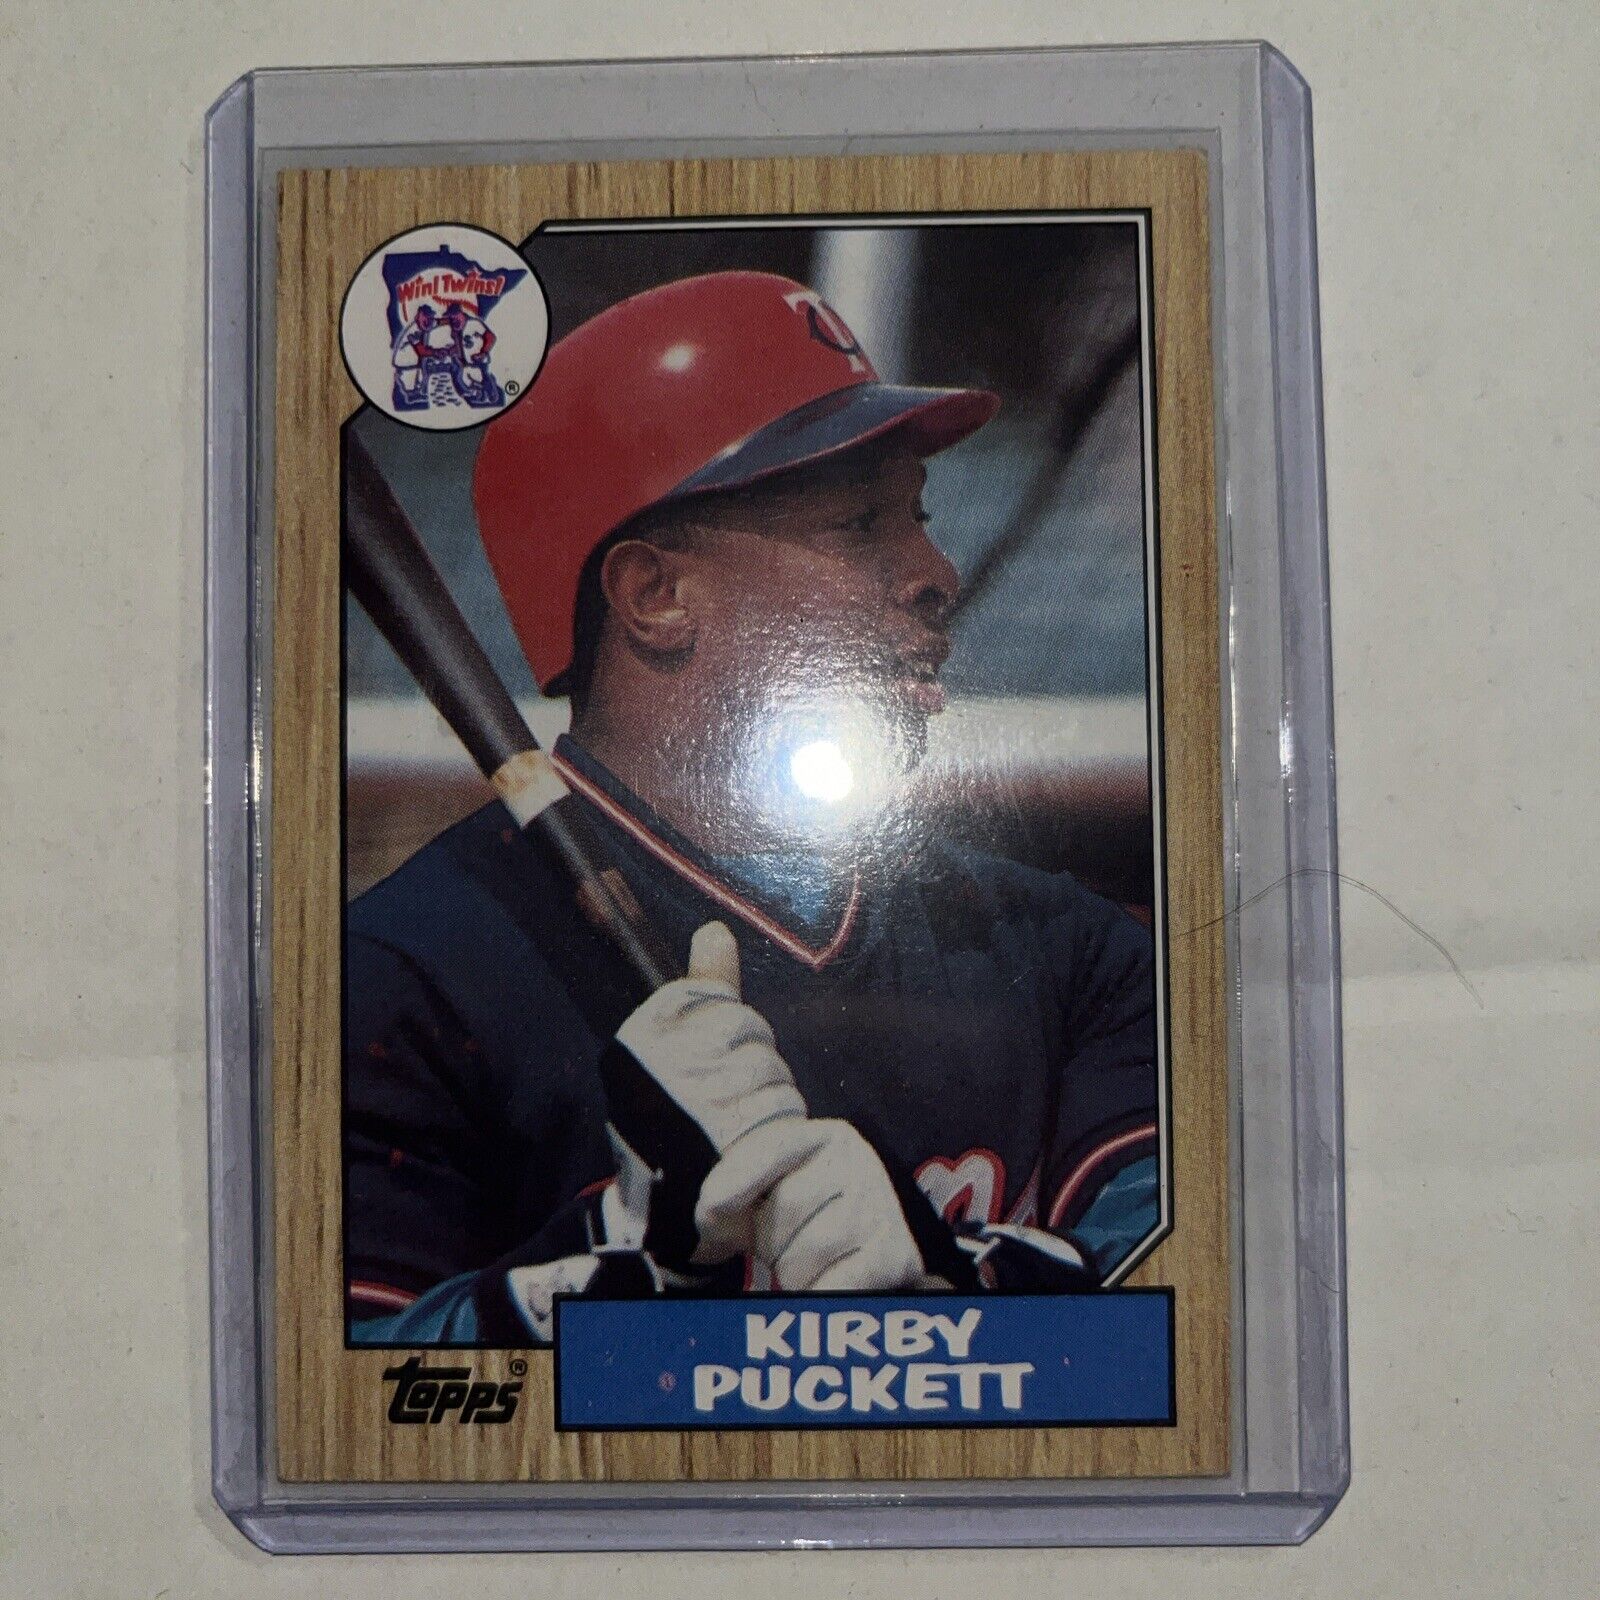 1987 Topps Kirby Puckett 450 DOUBLE ERROR CARD READ DESCRIPTION